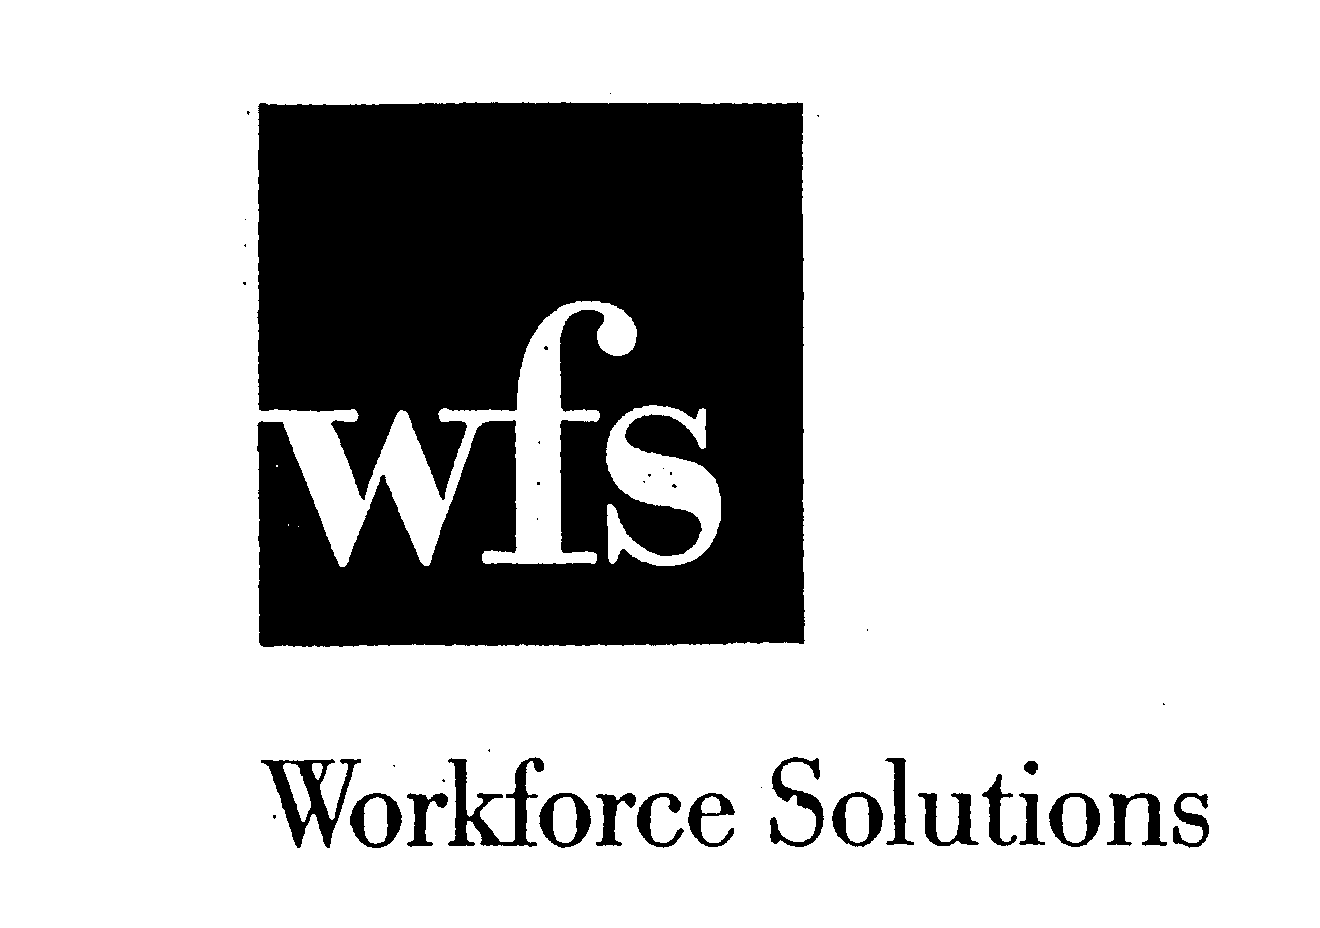 WFS WORKFORCE SOLUTIONS